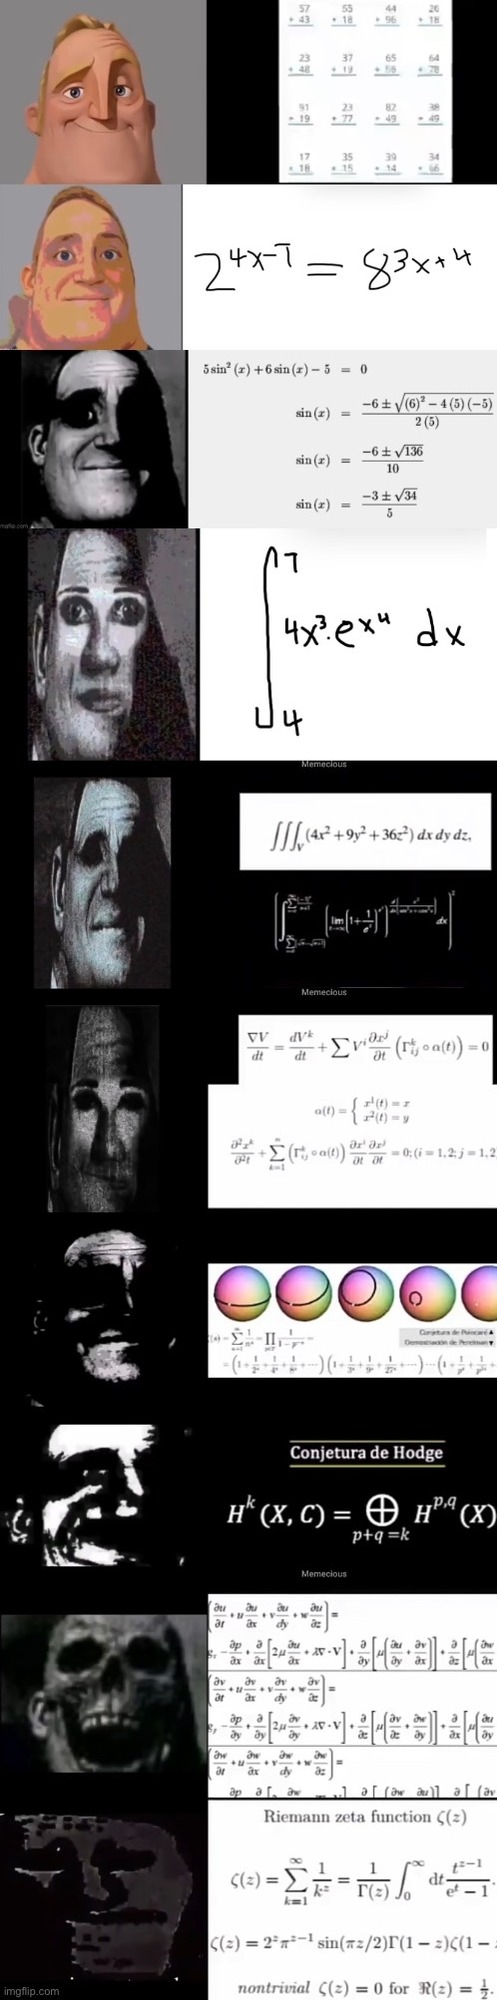 math is scary - meme